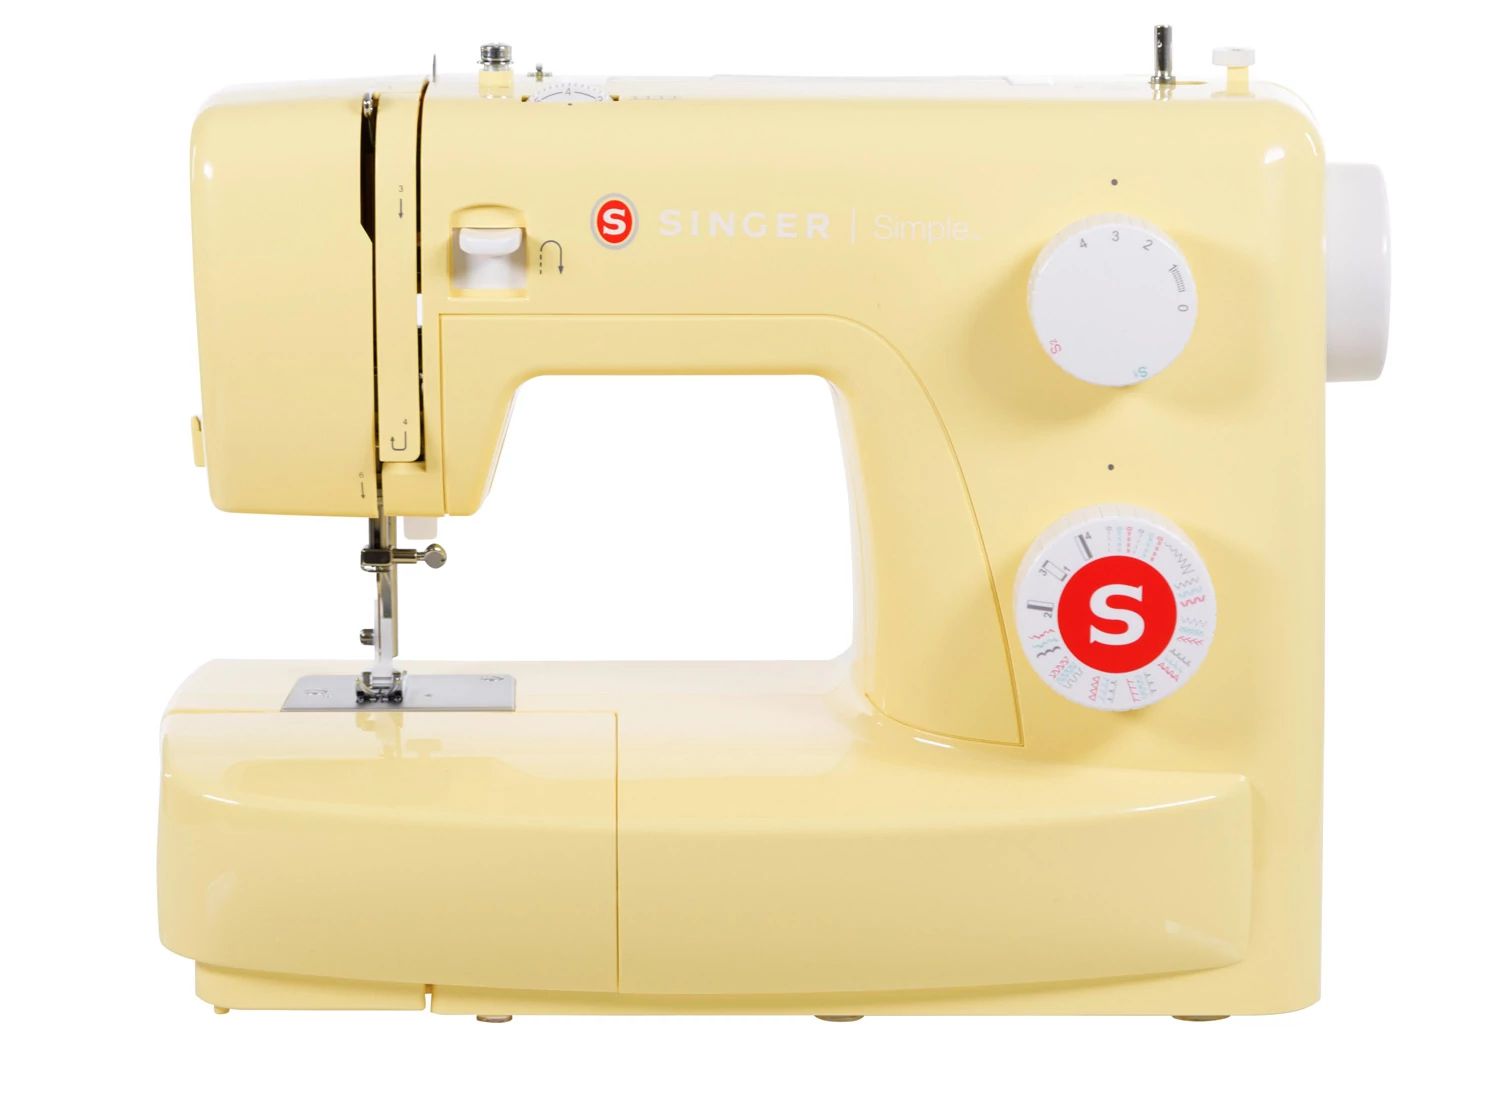 Simple 3221 Singer Sewing Machine, Multicolor